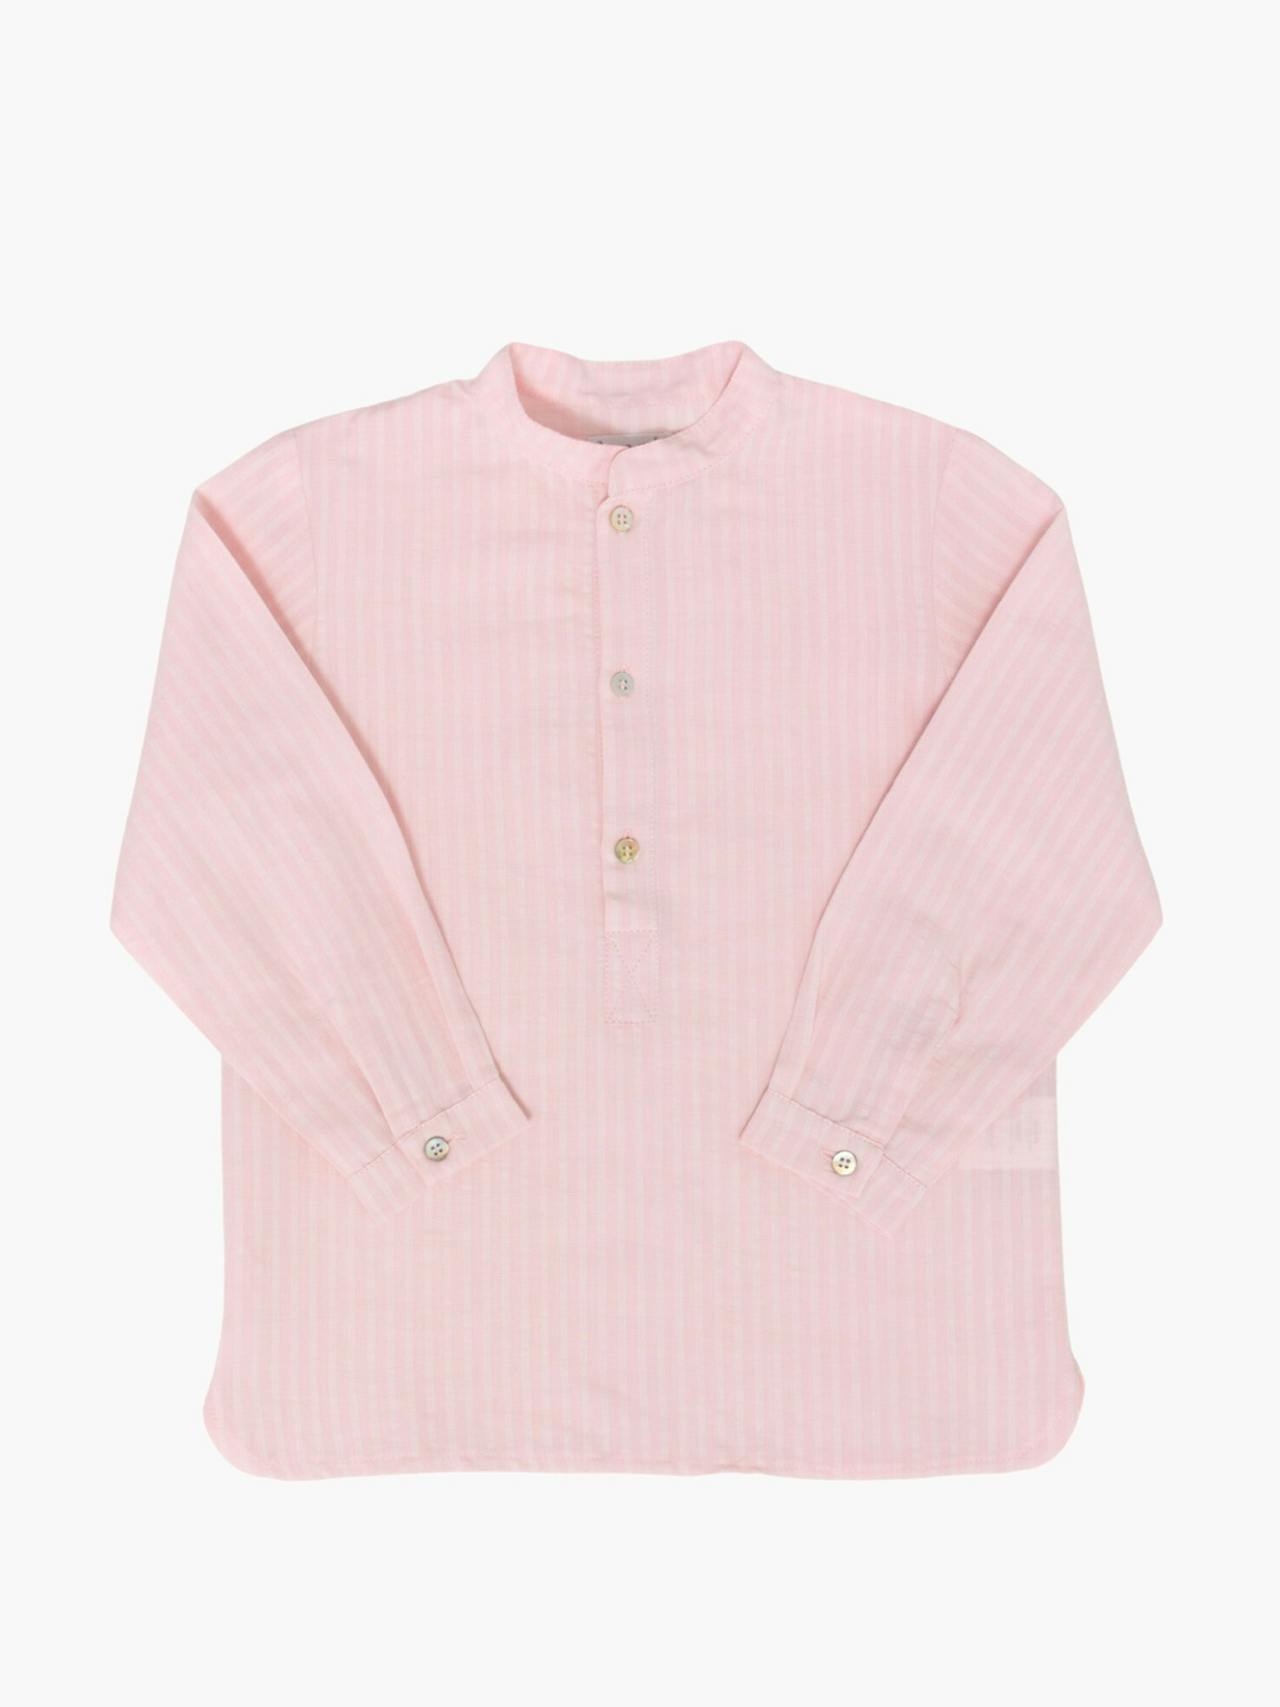 Pereprine shirt soft pink seersucker